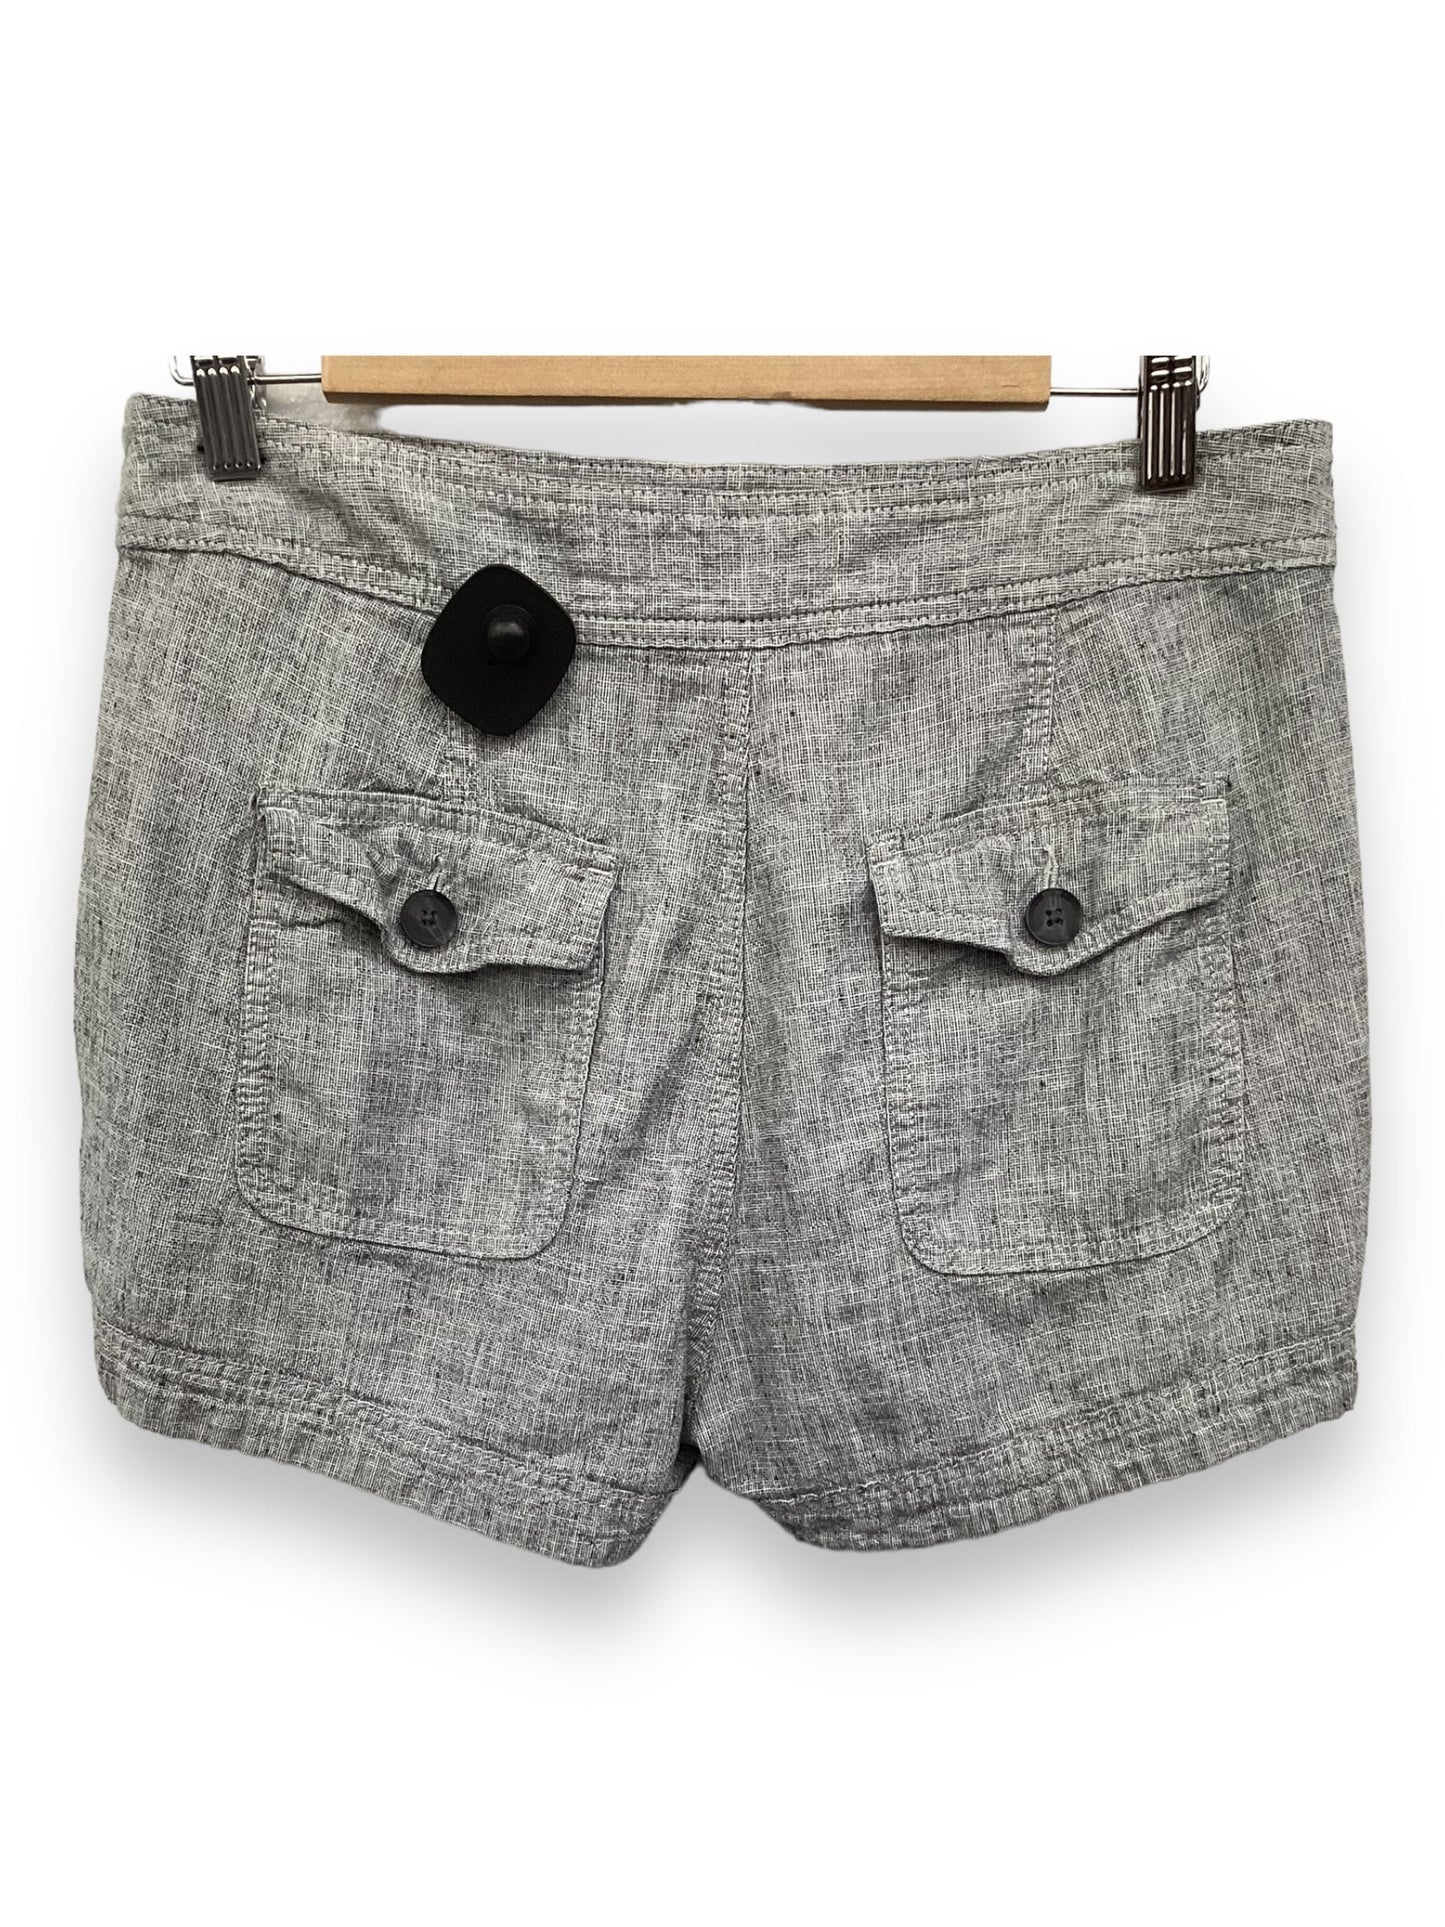 Grey Shorts Express, Size 8